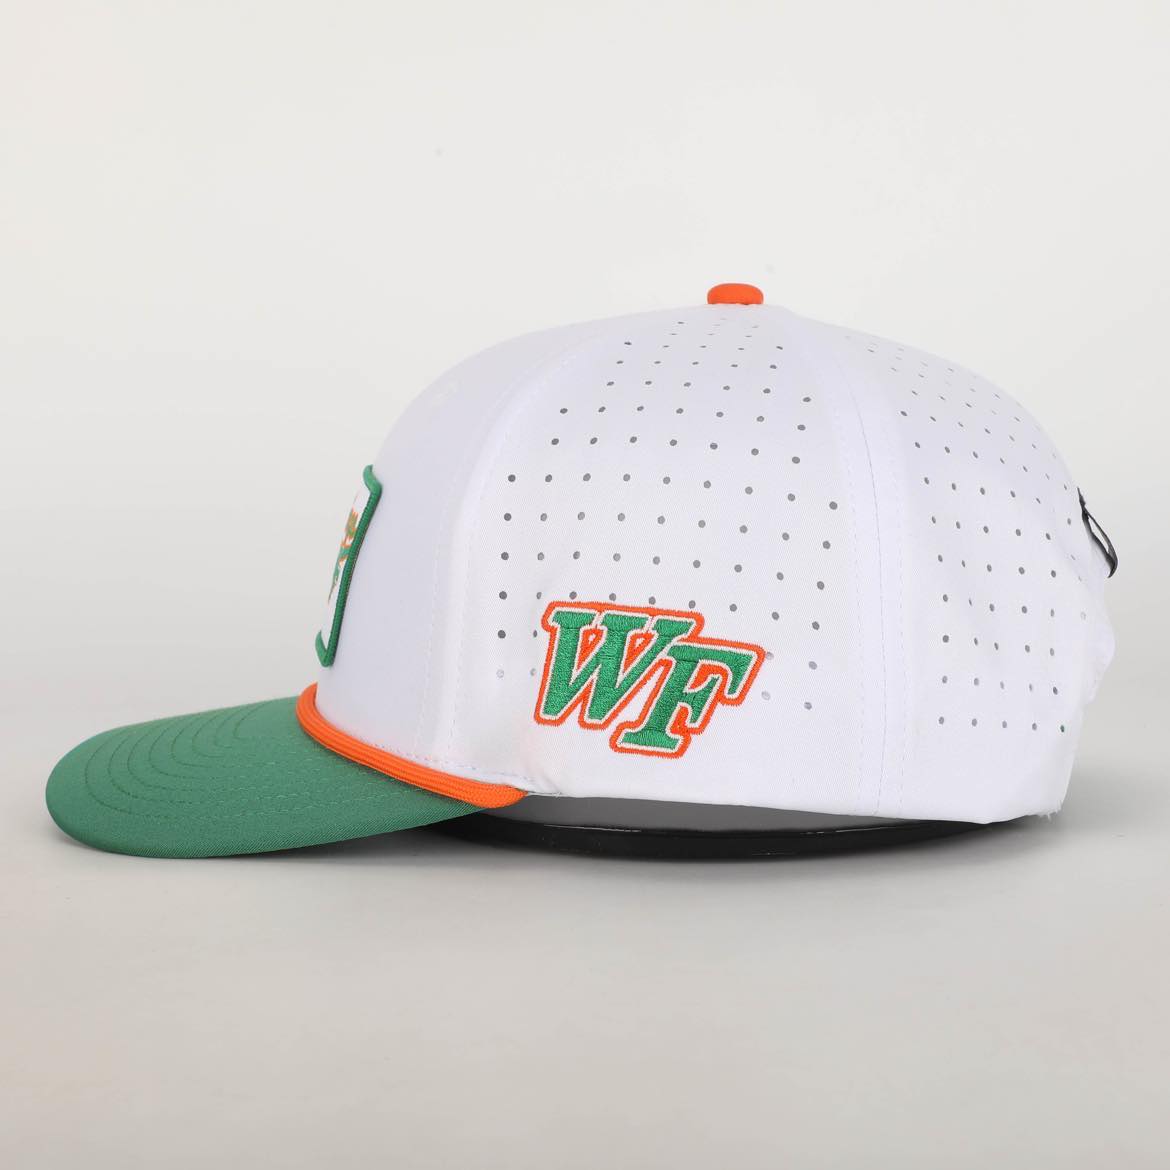 West Fargo Baseball Hat - Preorder!